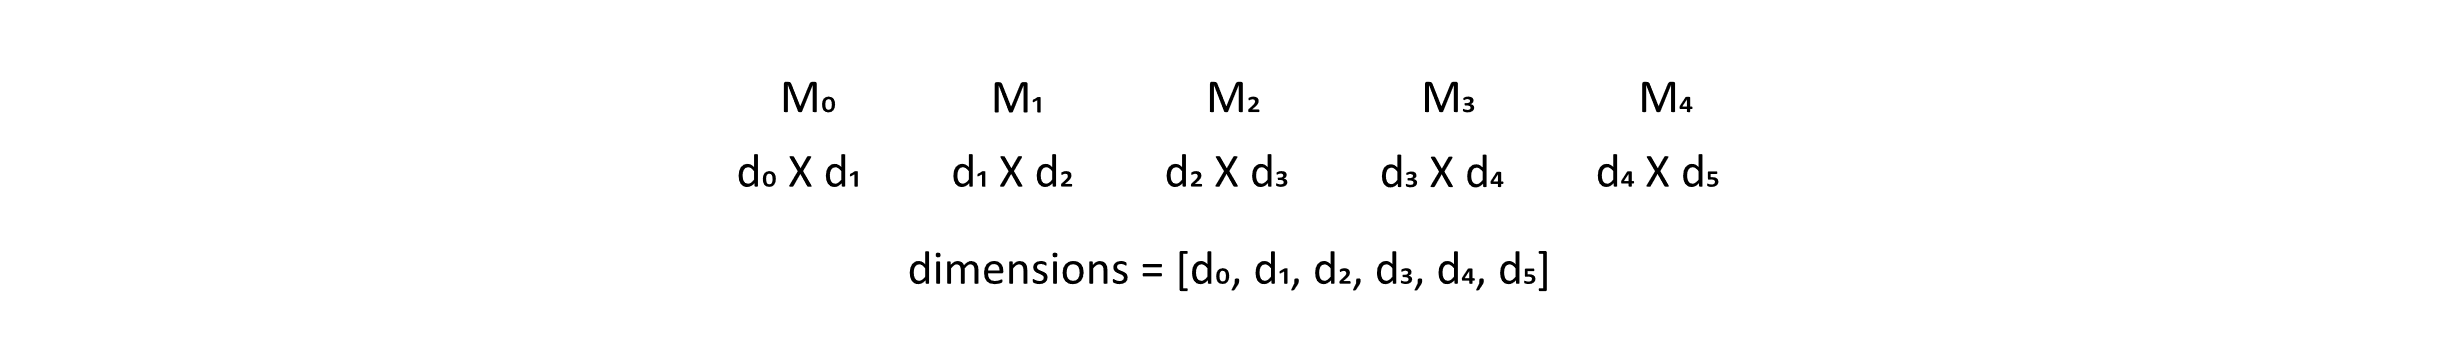 An example matrix chain having 5 matrices.